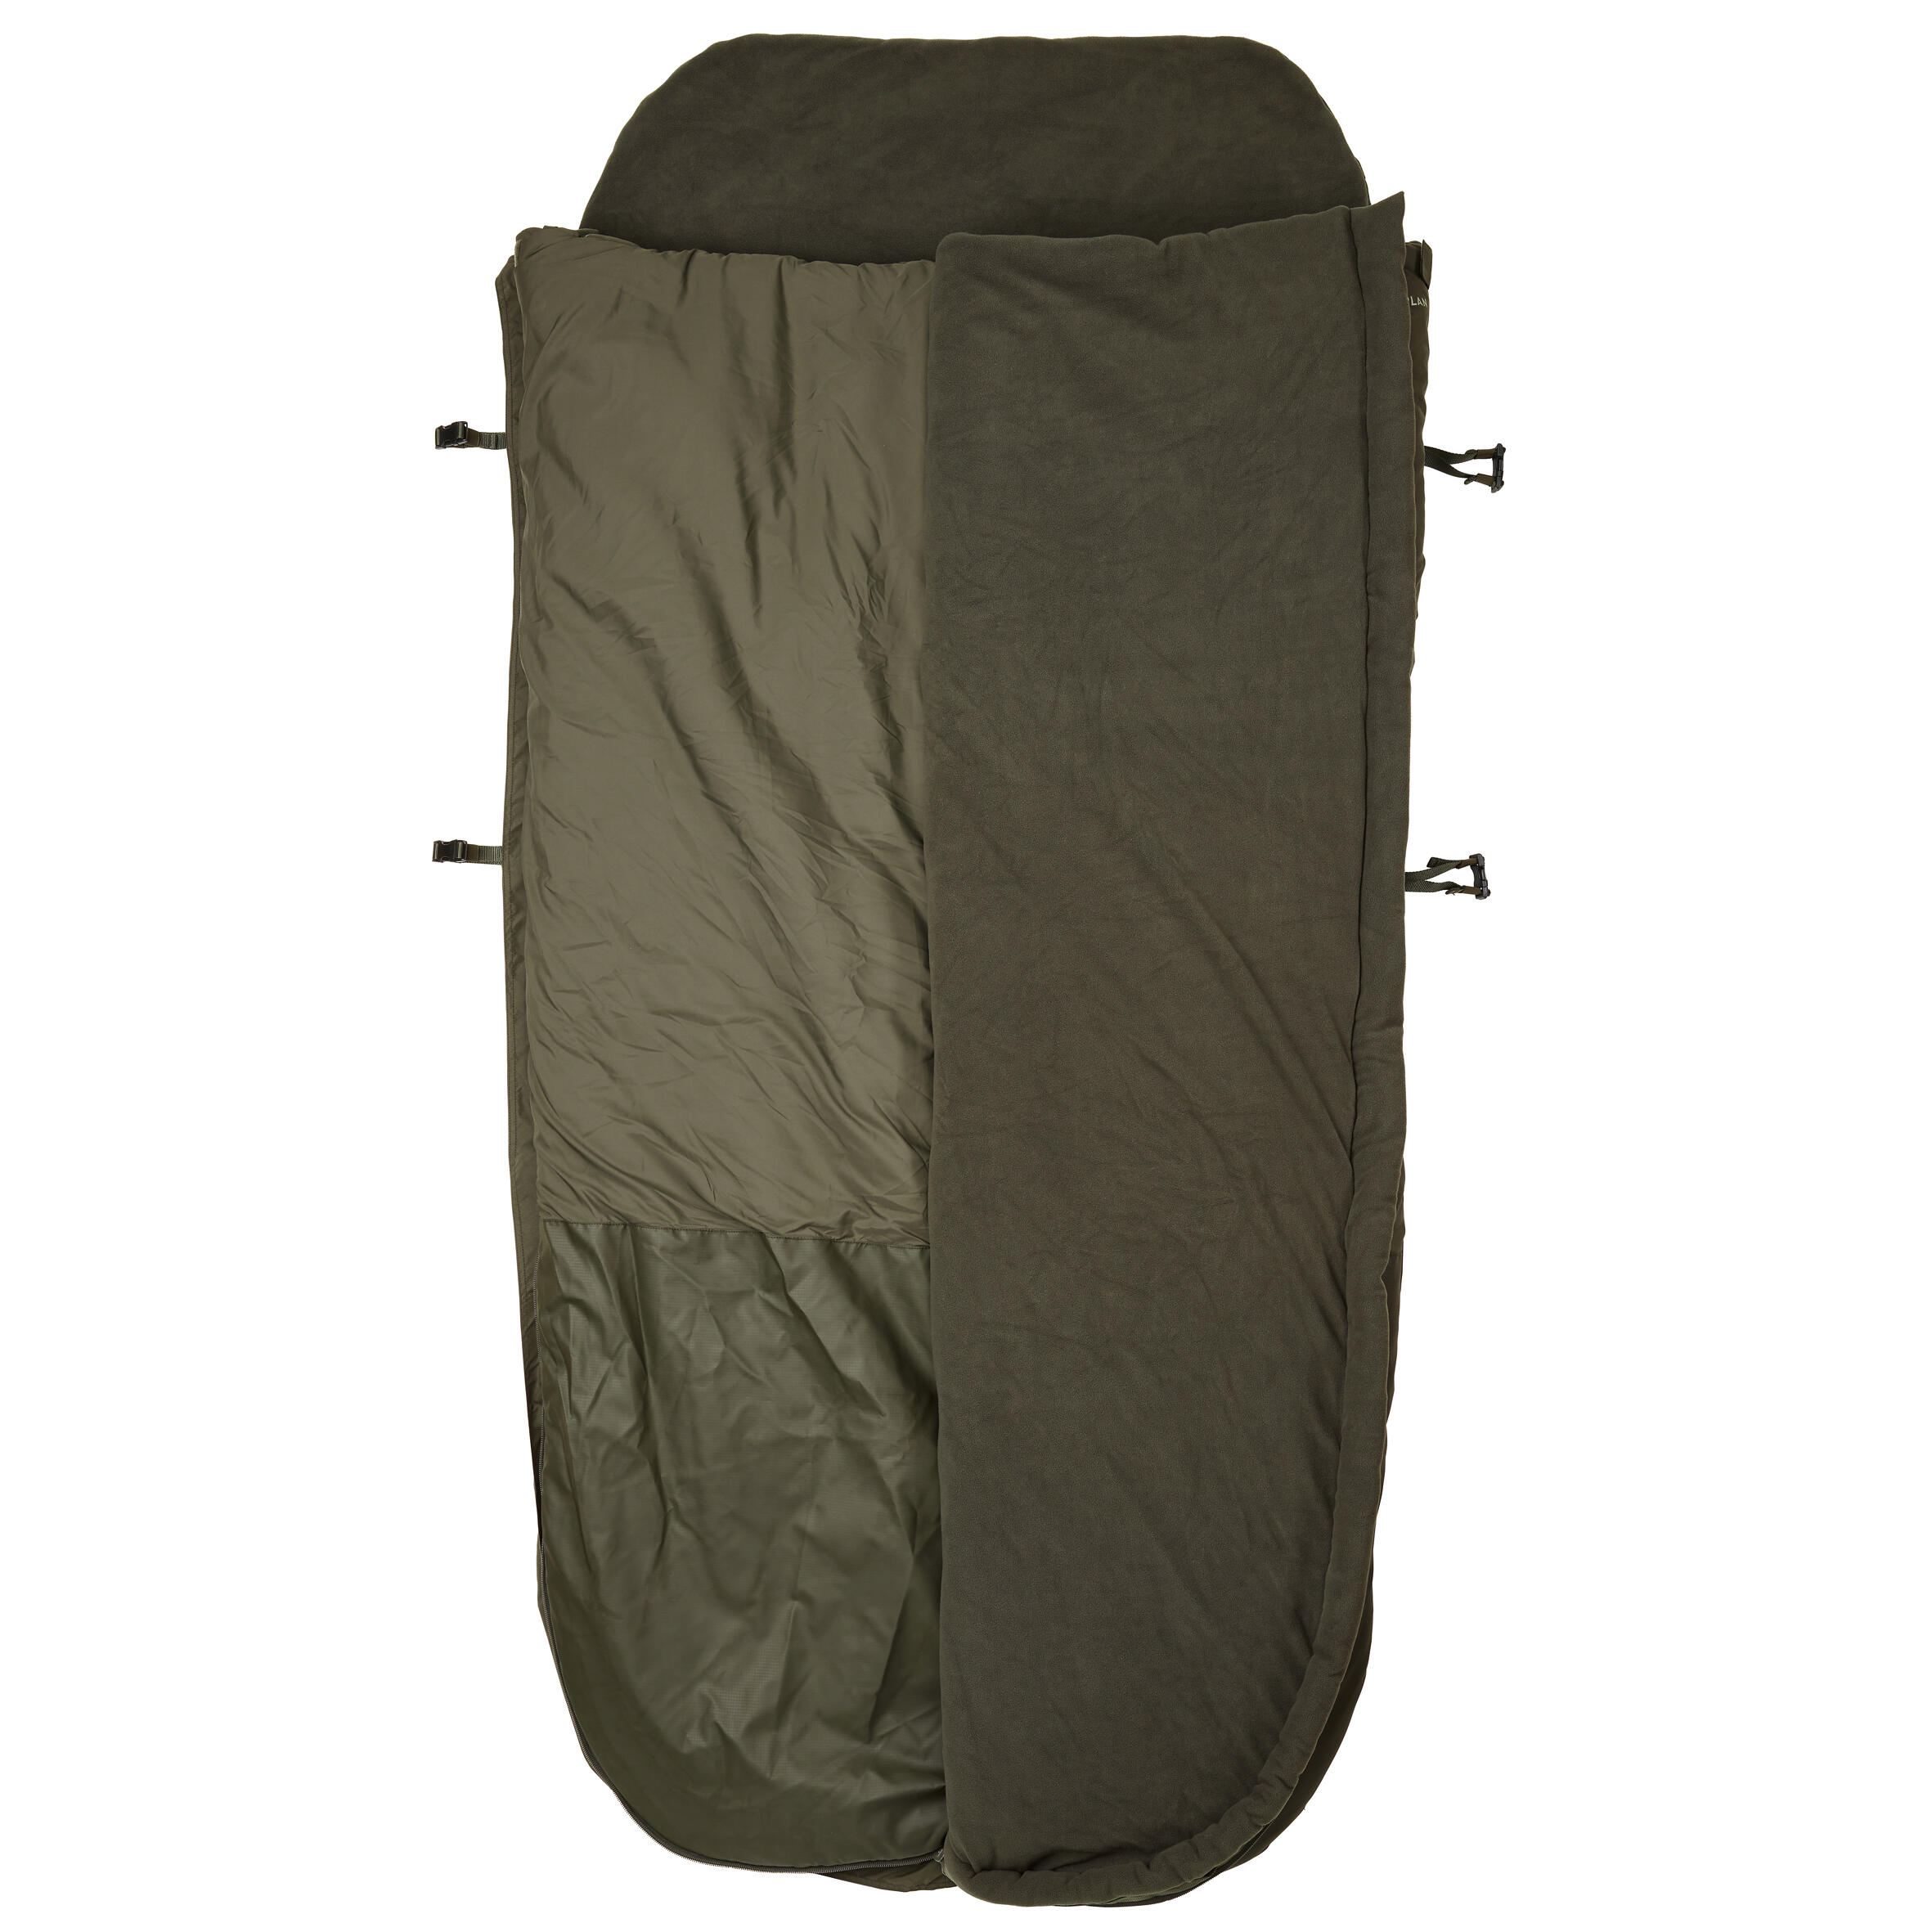 CAPERLAN 4-season sleeping bag for carp fishing